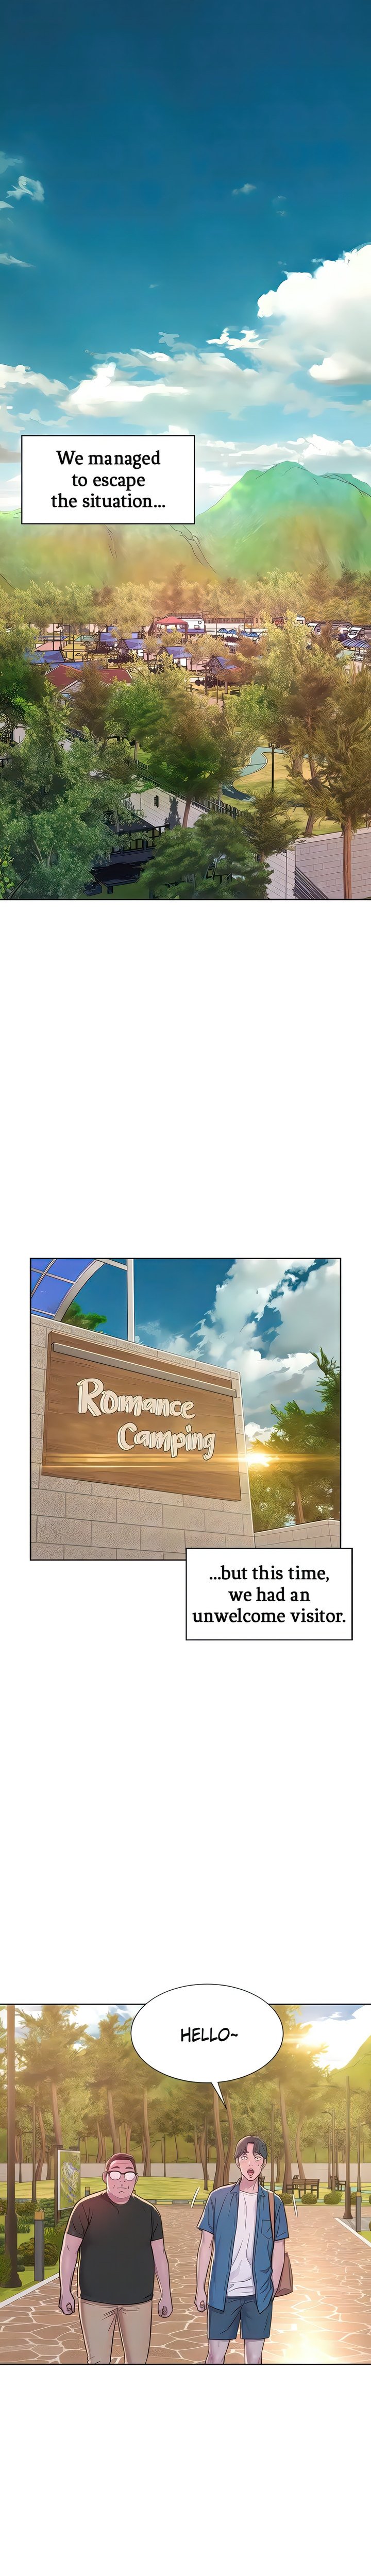 romantic-camping-chap-68-14